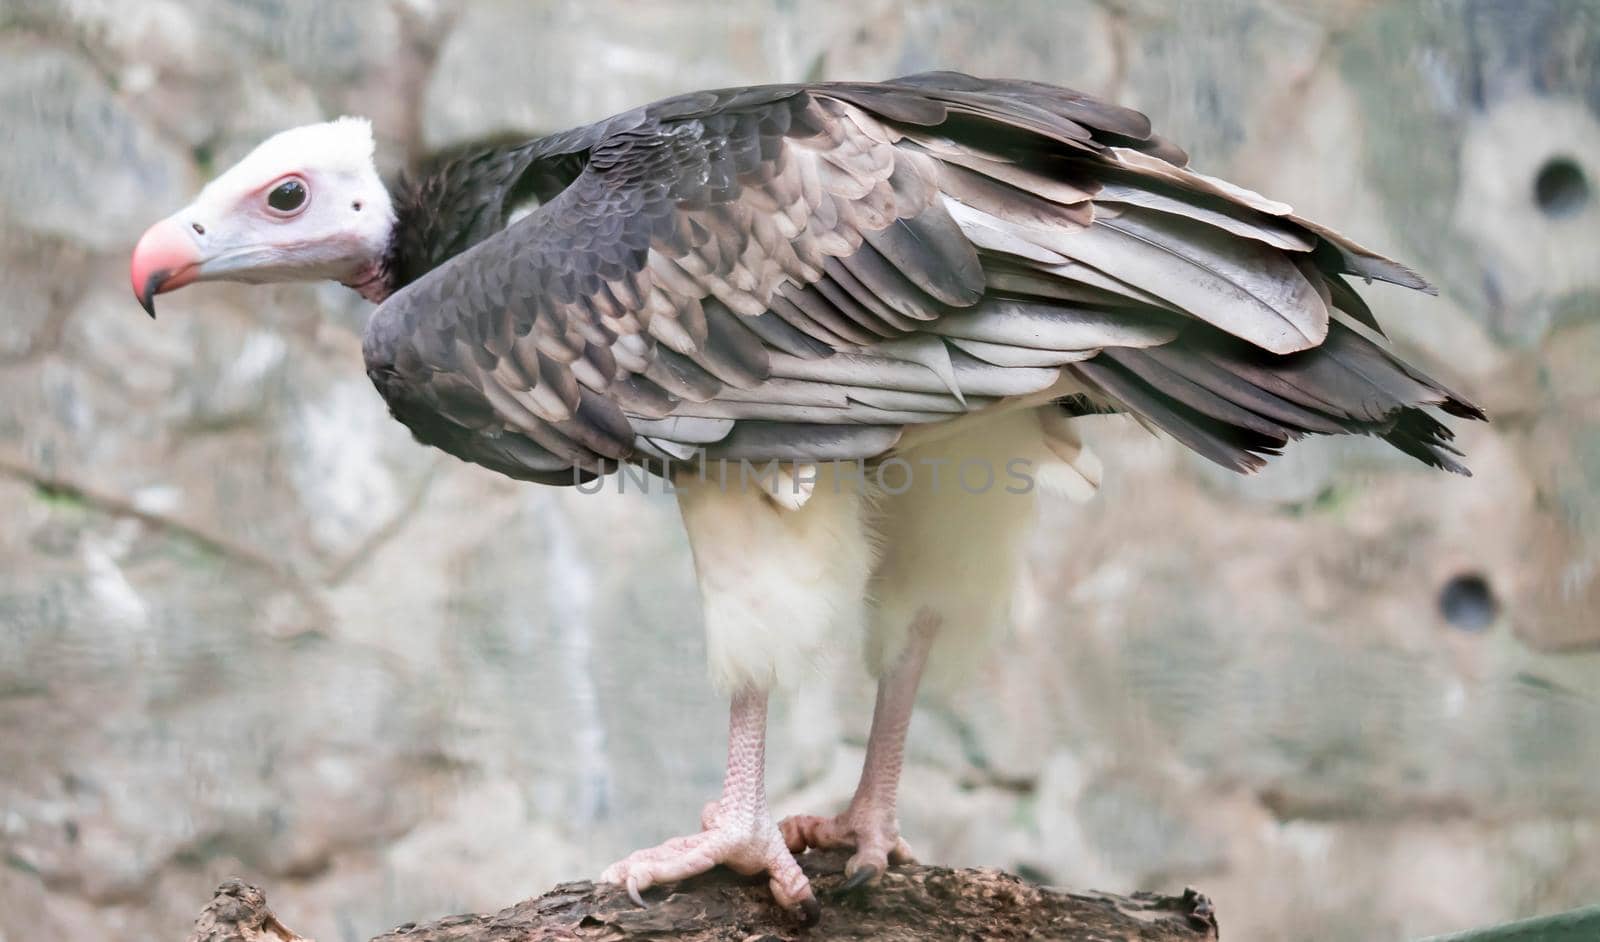 White-headed vulture (Trigonoceps occipitalis) by billroque